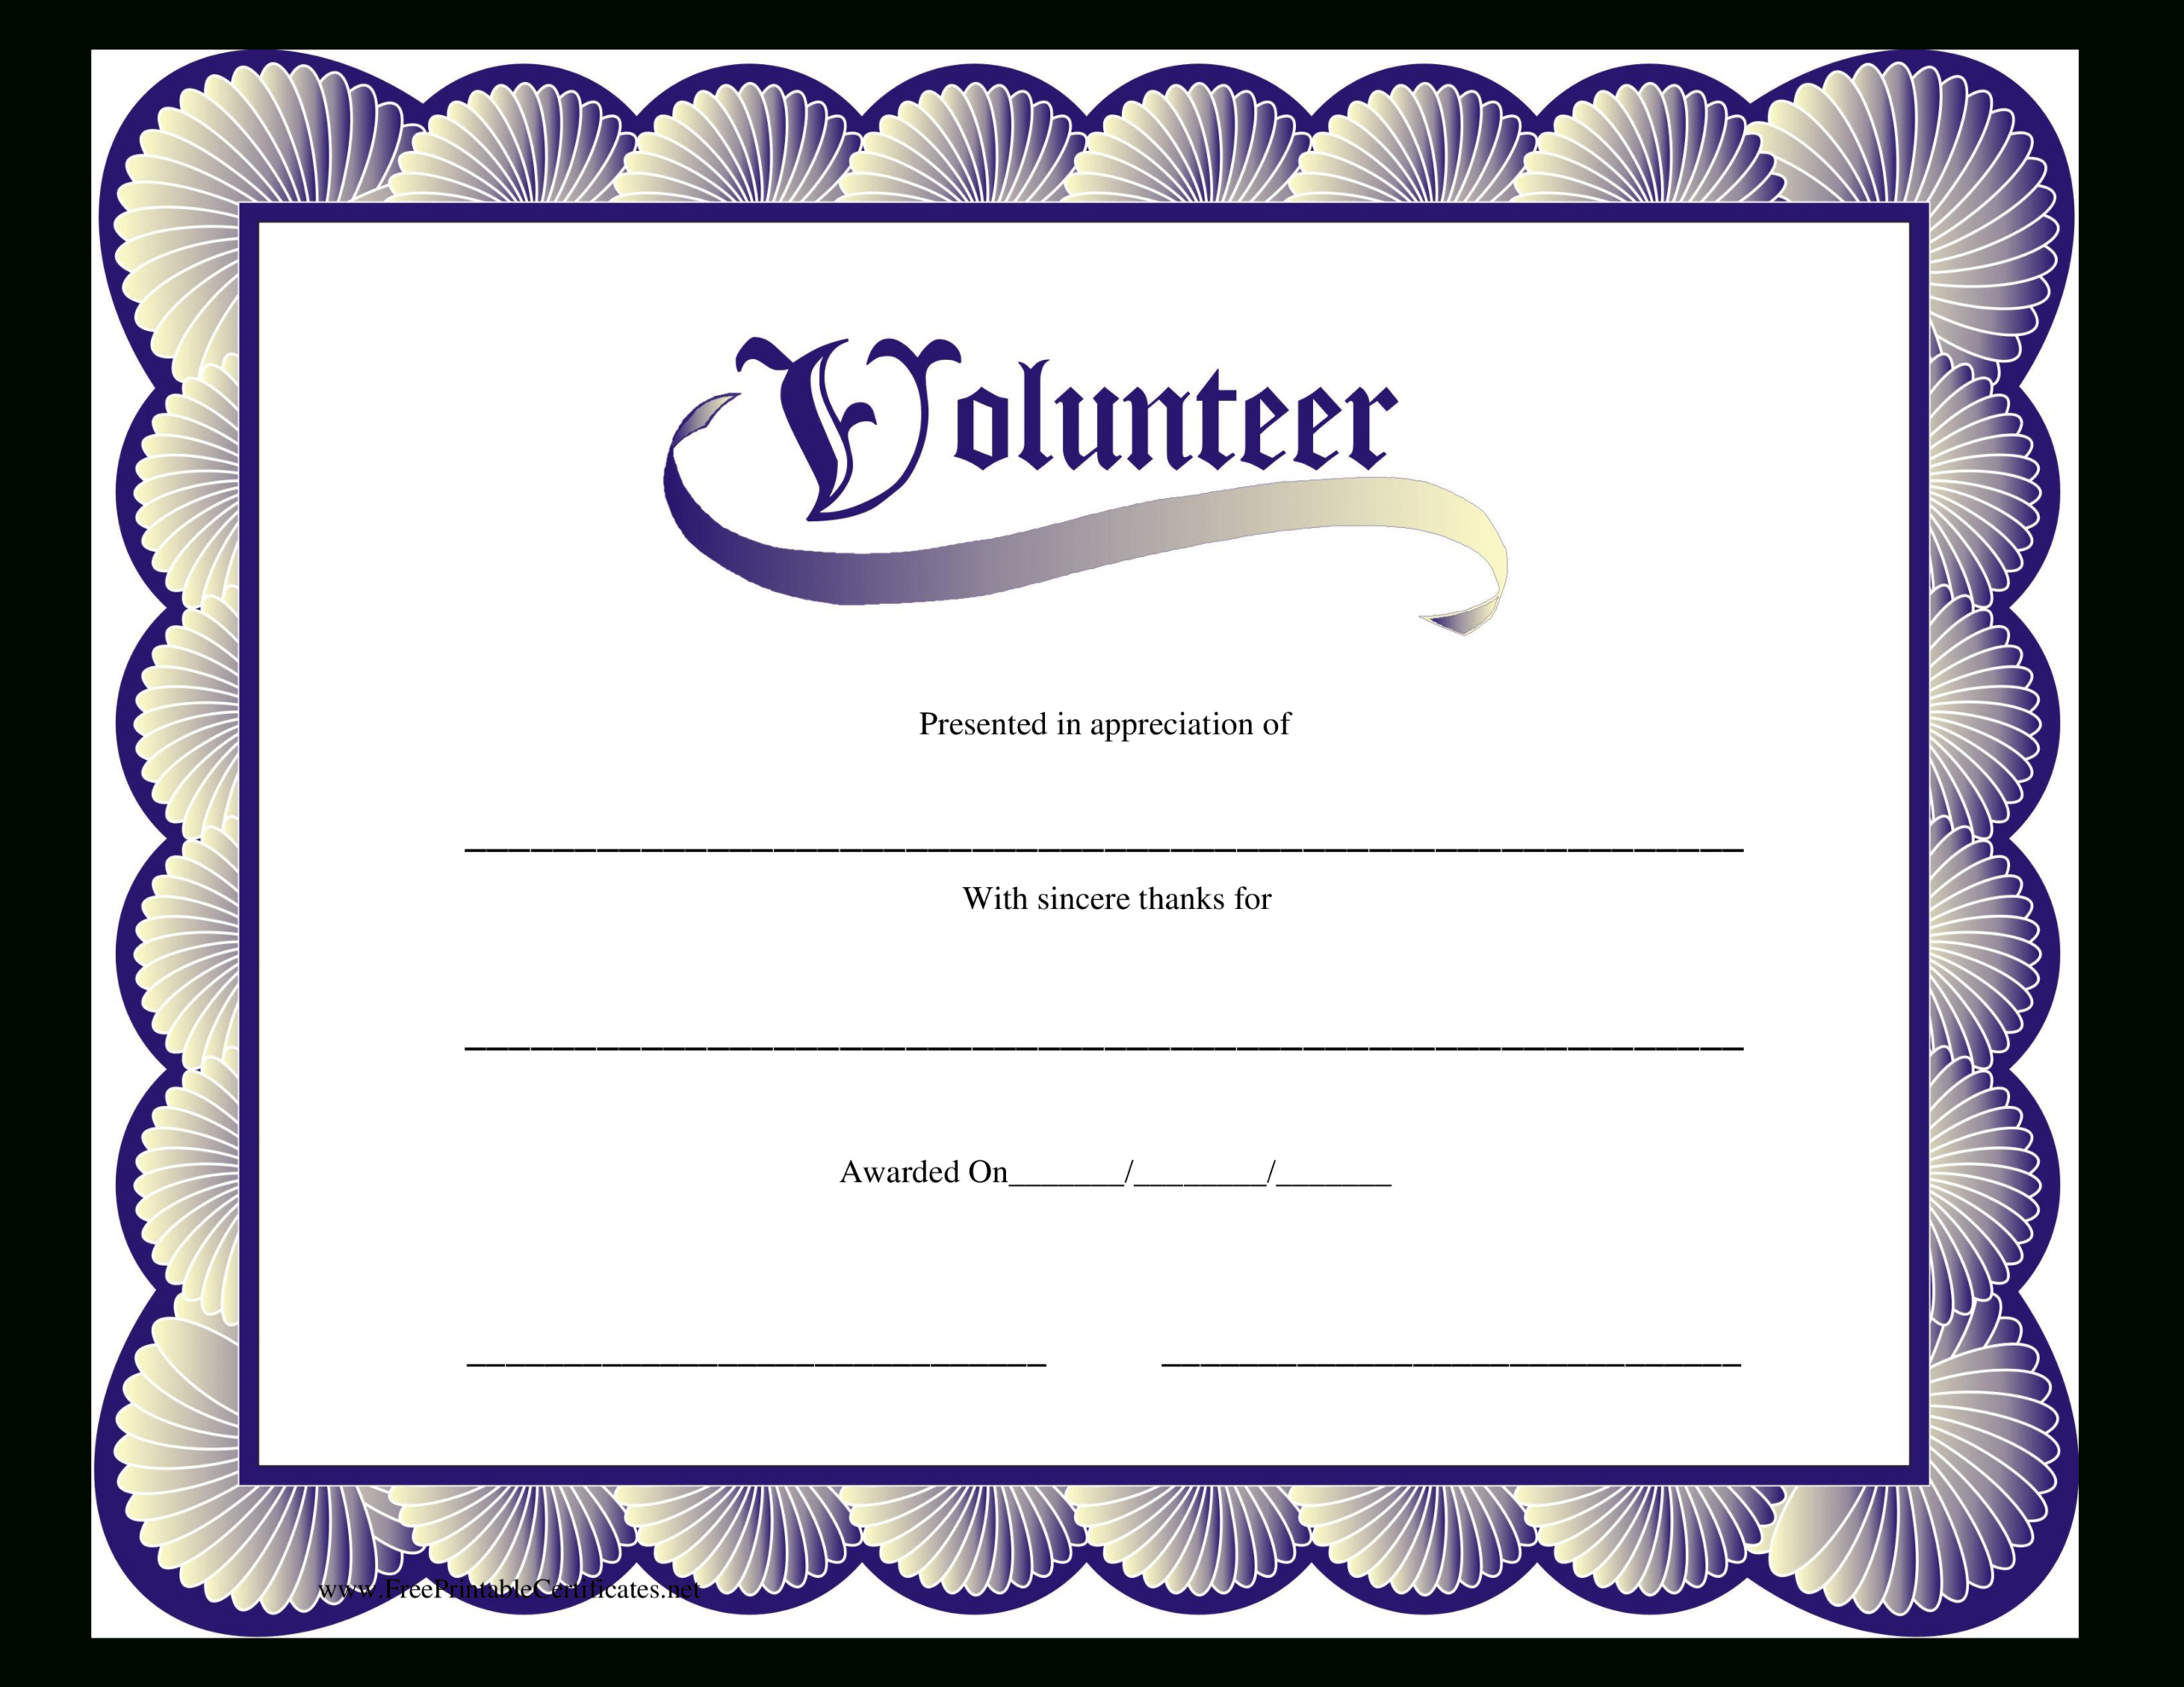 Volunteer Certificate | Templates At Allbusinesstemplates For Volunteer Of The Year Certificate Template